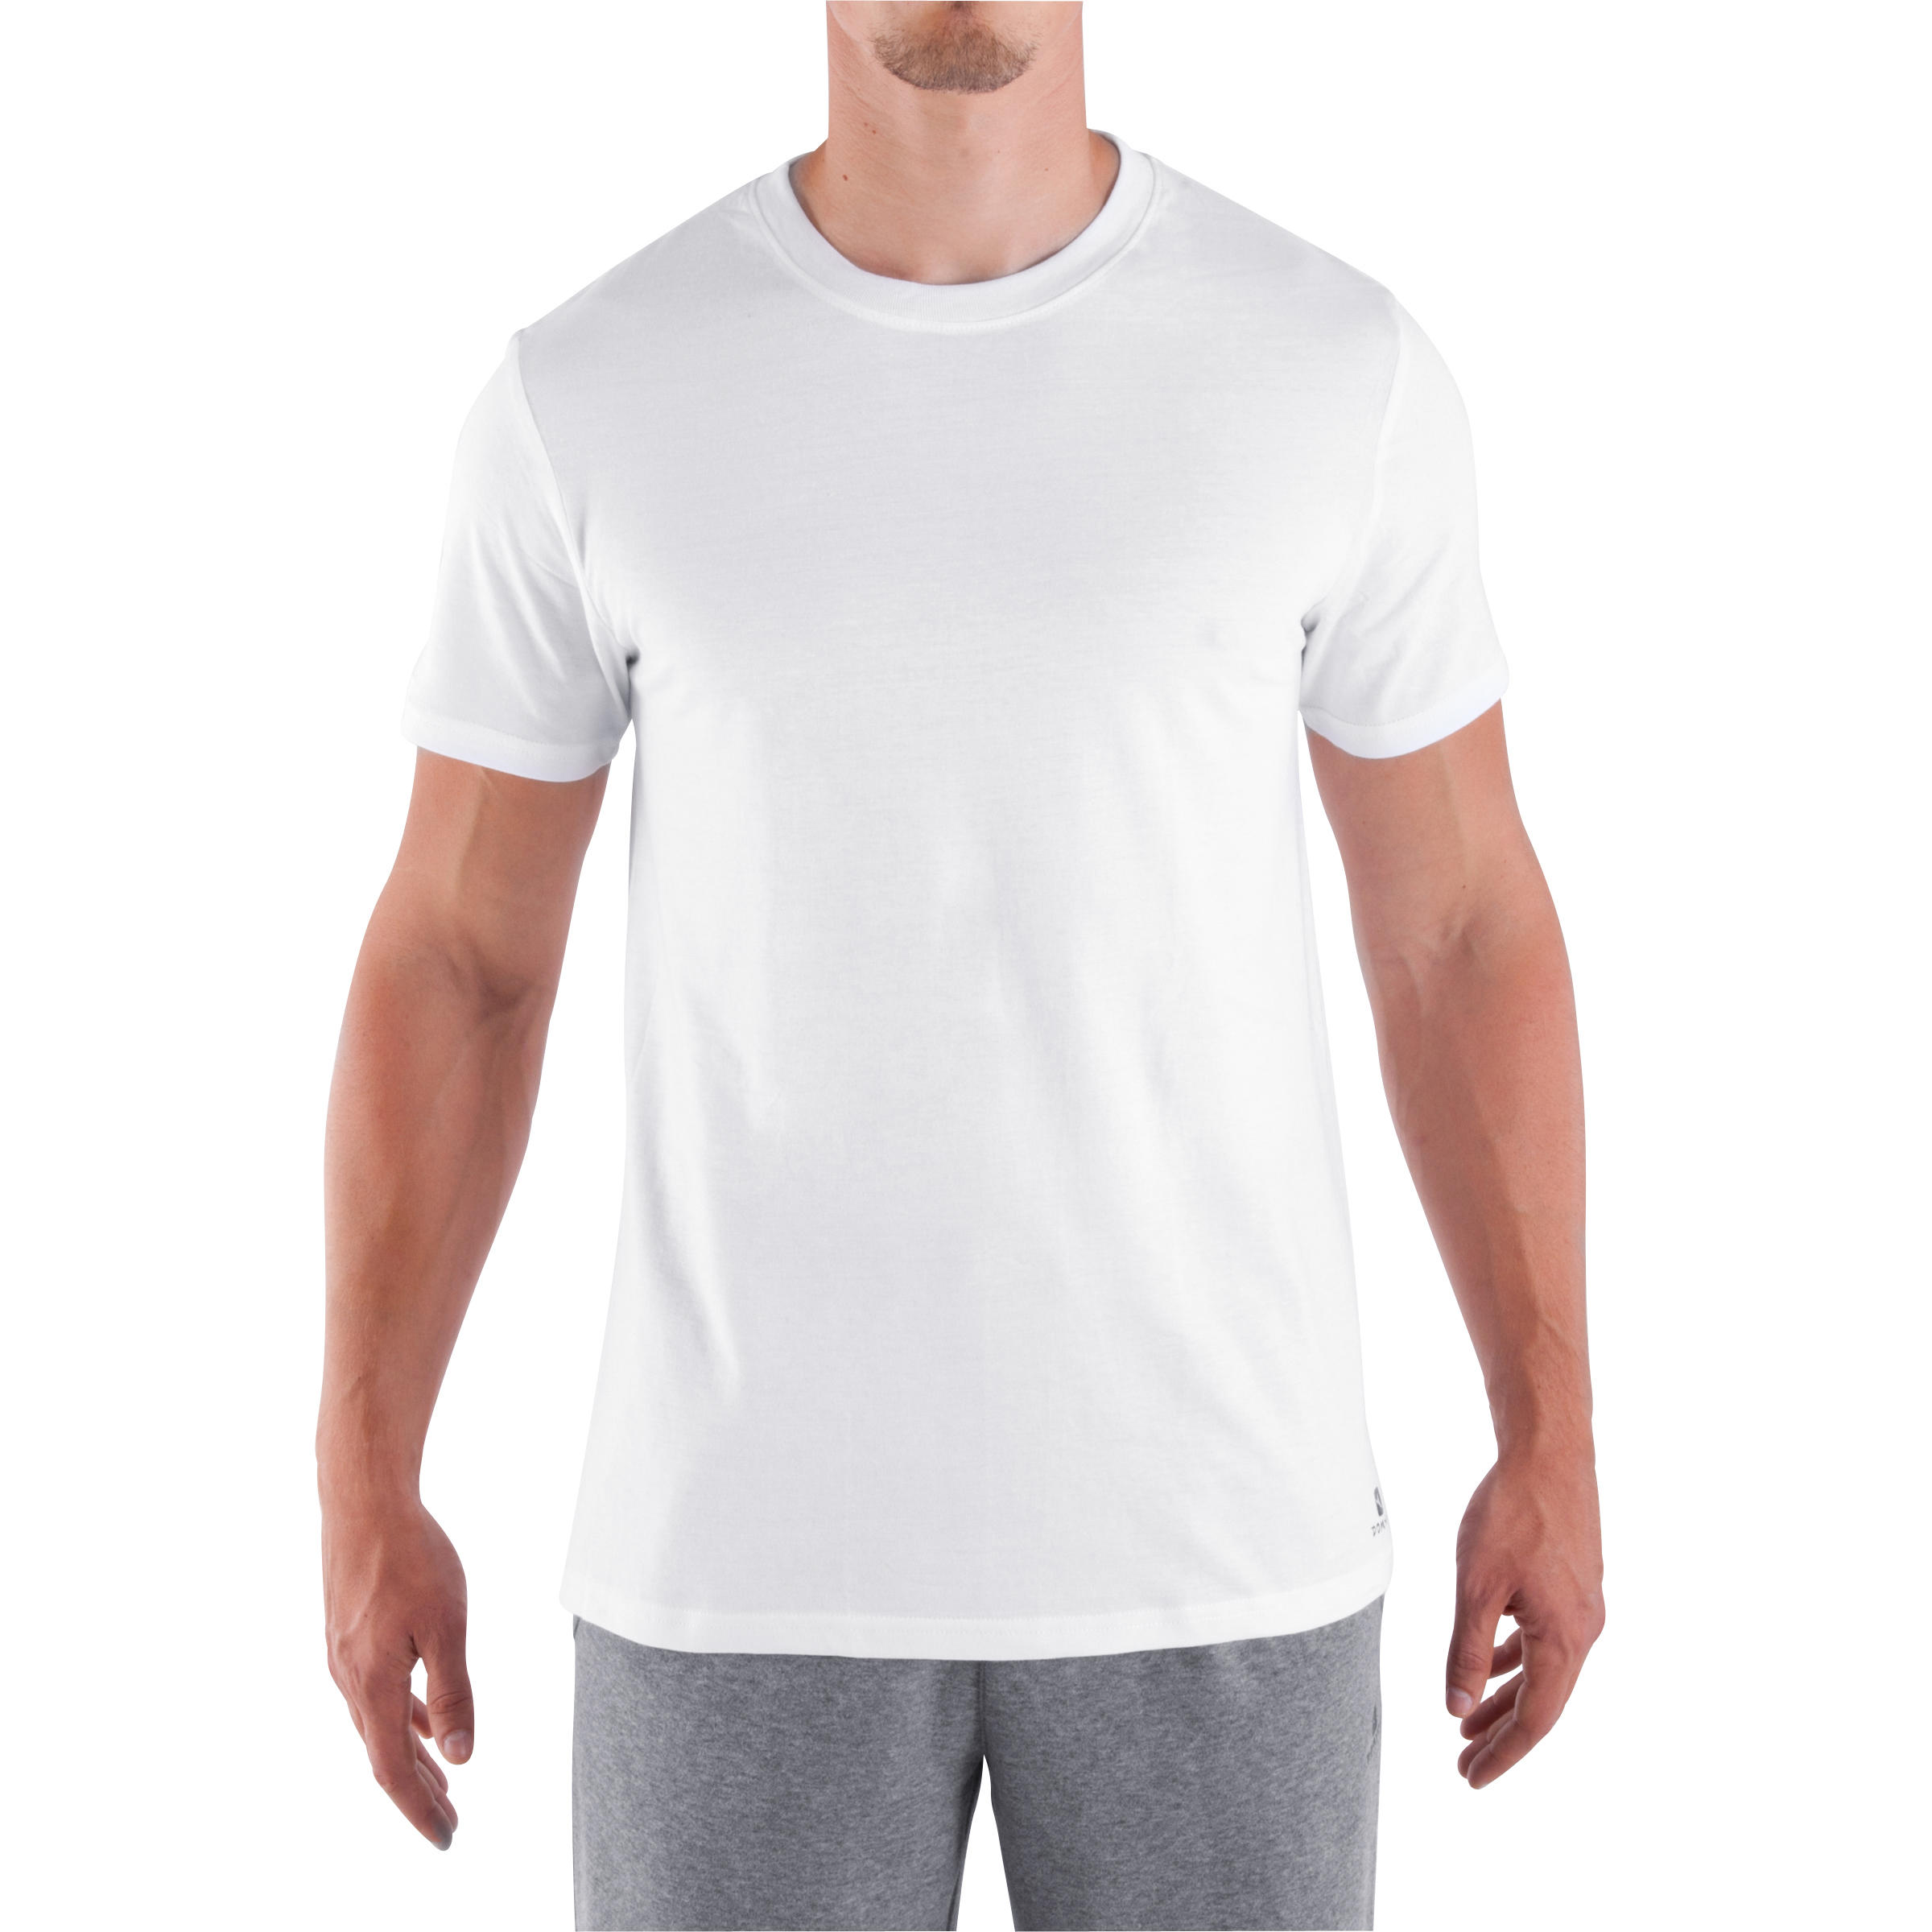 decathlon white shirt